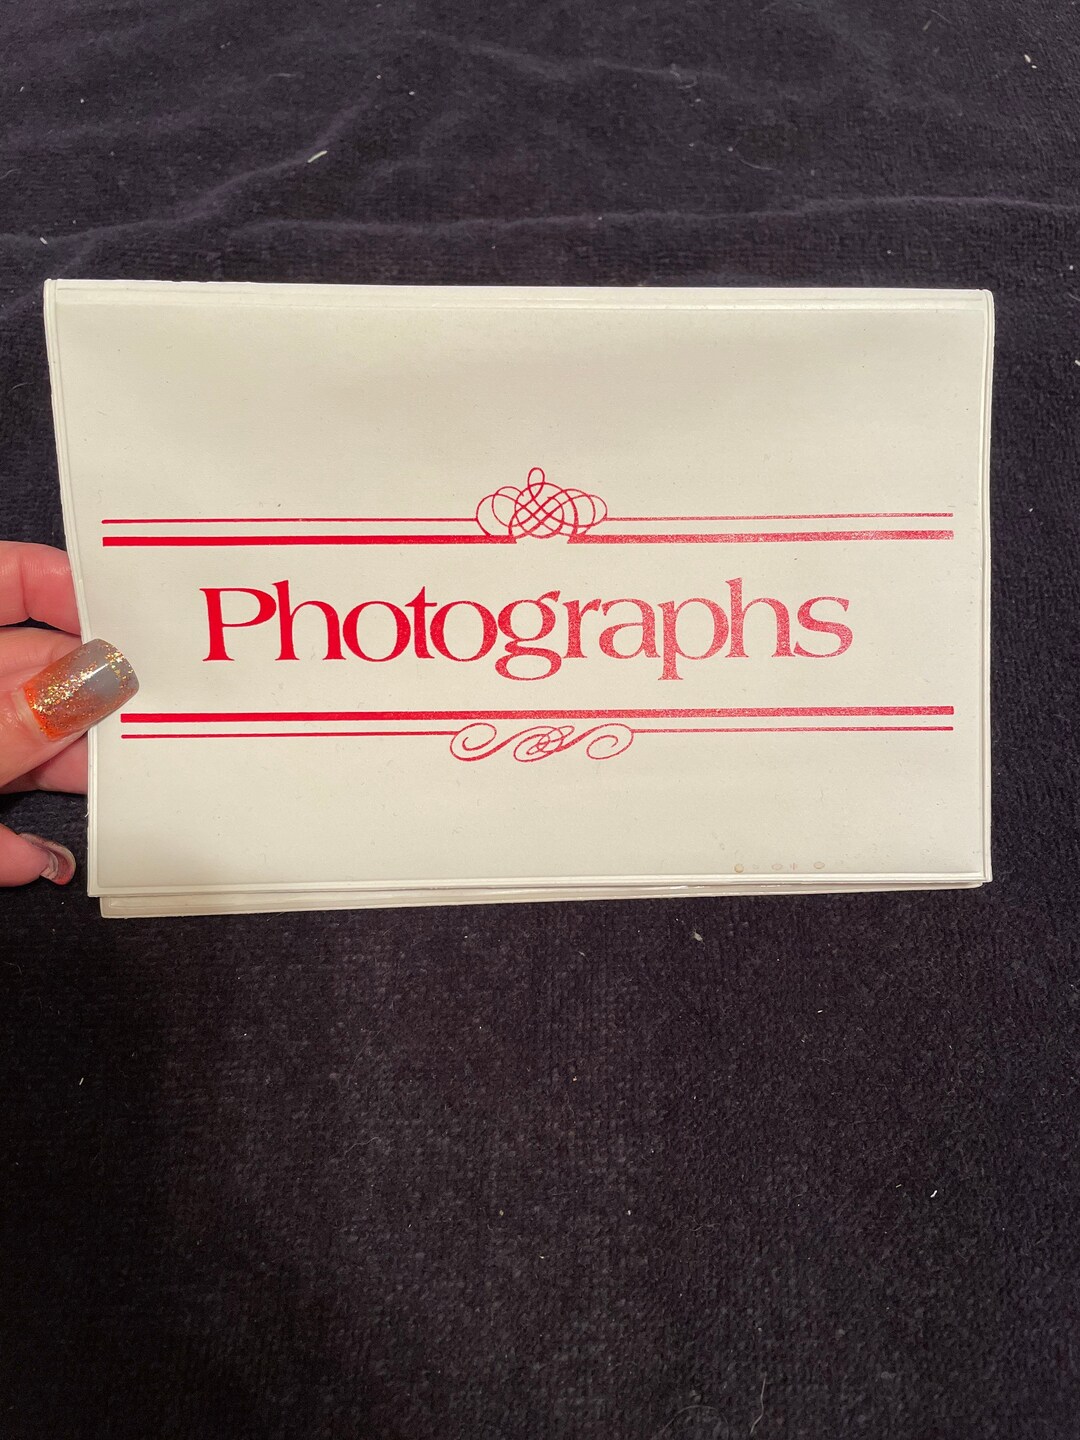 Vintage Envelopes editorial photography. Image of postmark - 22611457